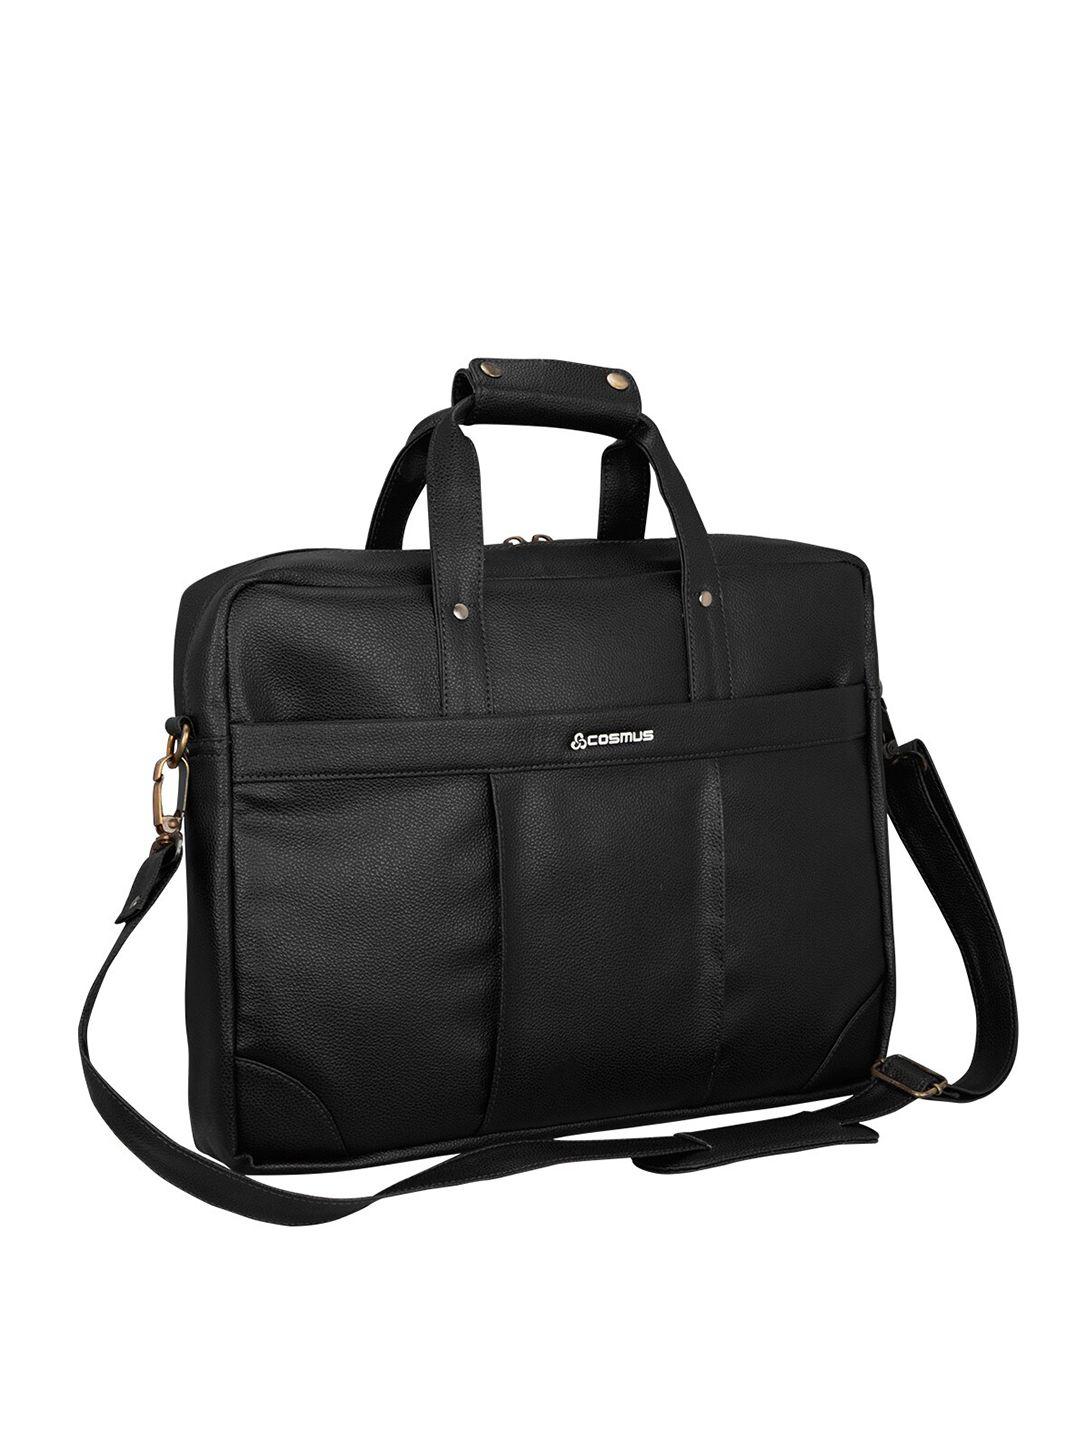 cosmus unisex black pu laptop bag